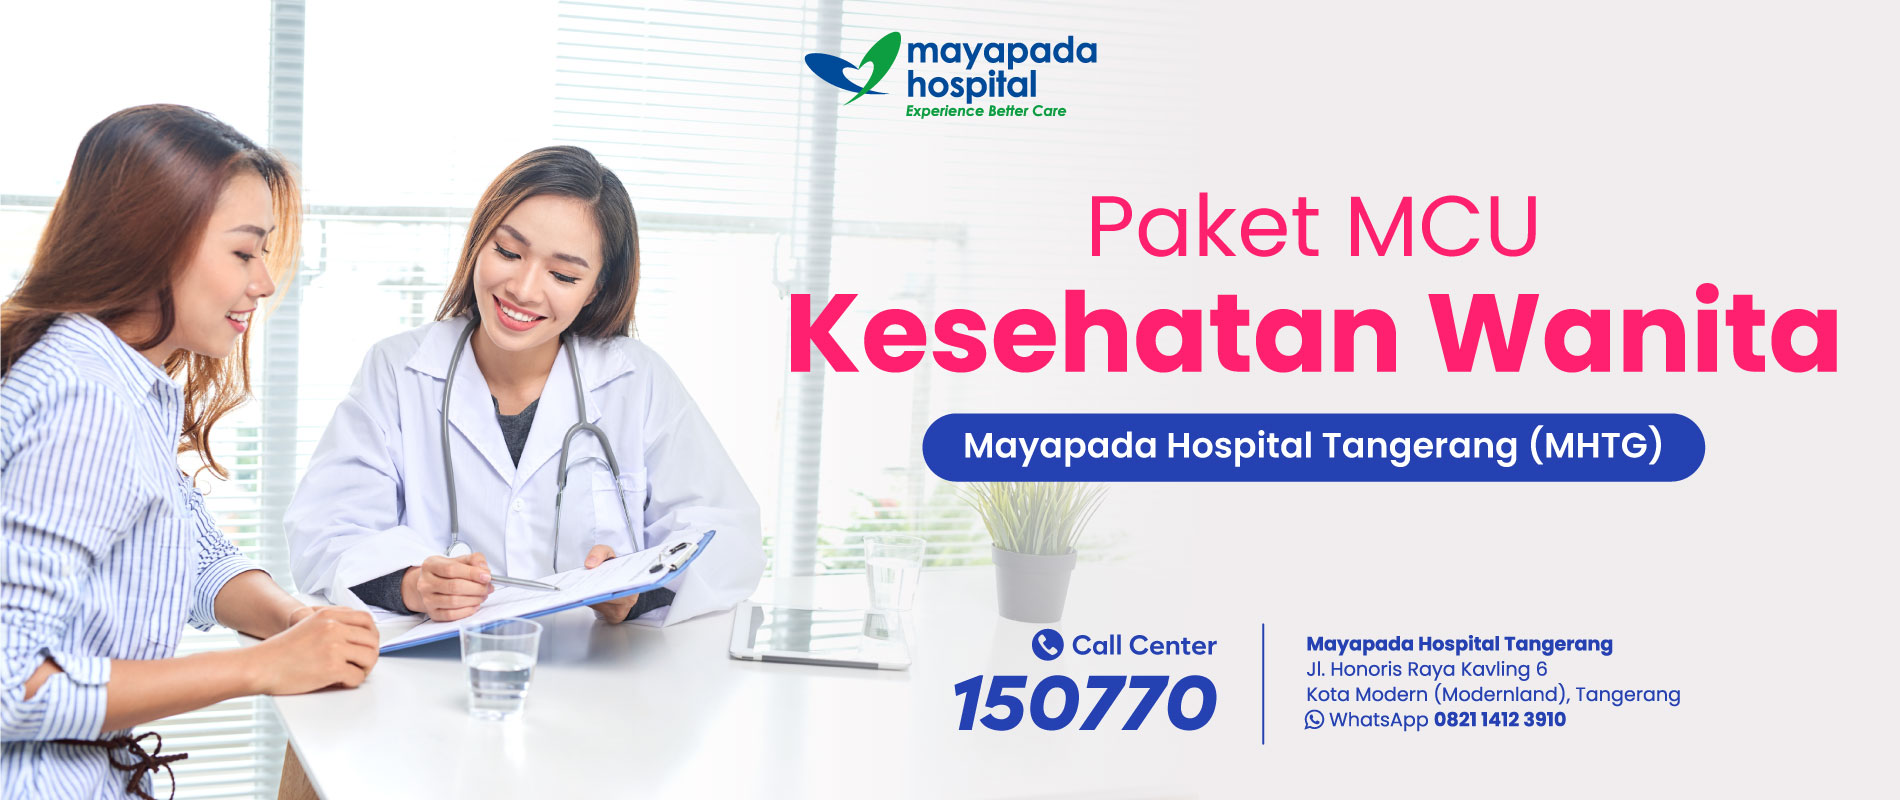 Promo MCU Kesehatan Wanita Mayapada Hospital Tangerang IMG